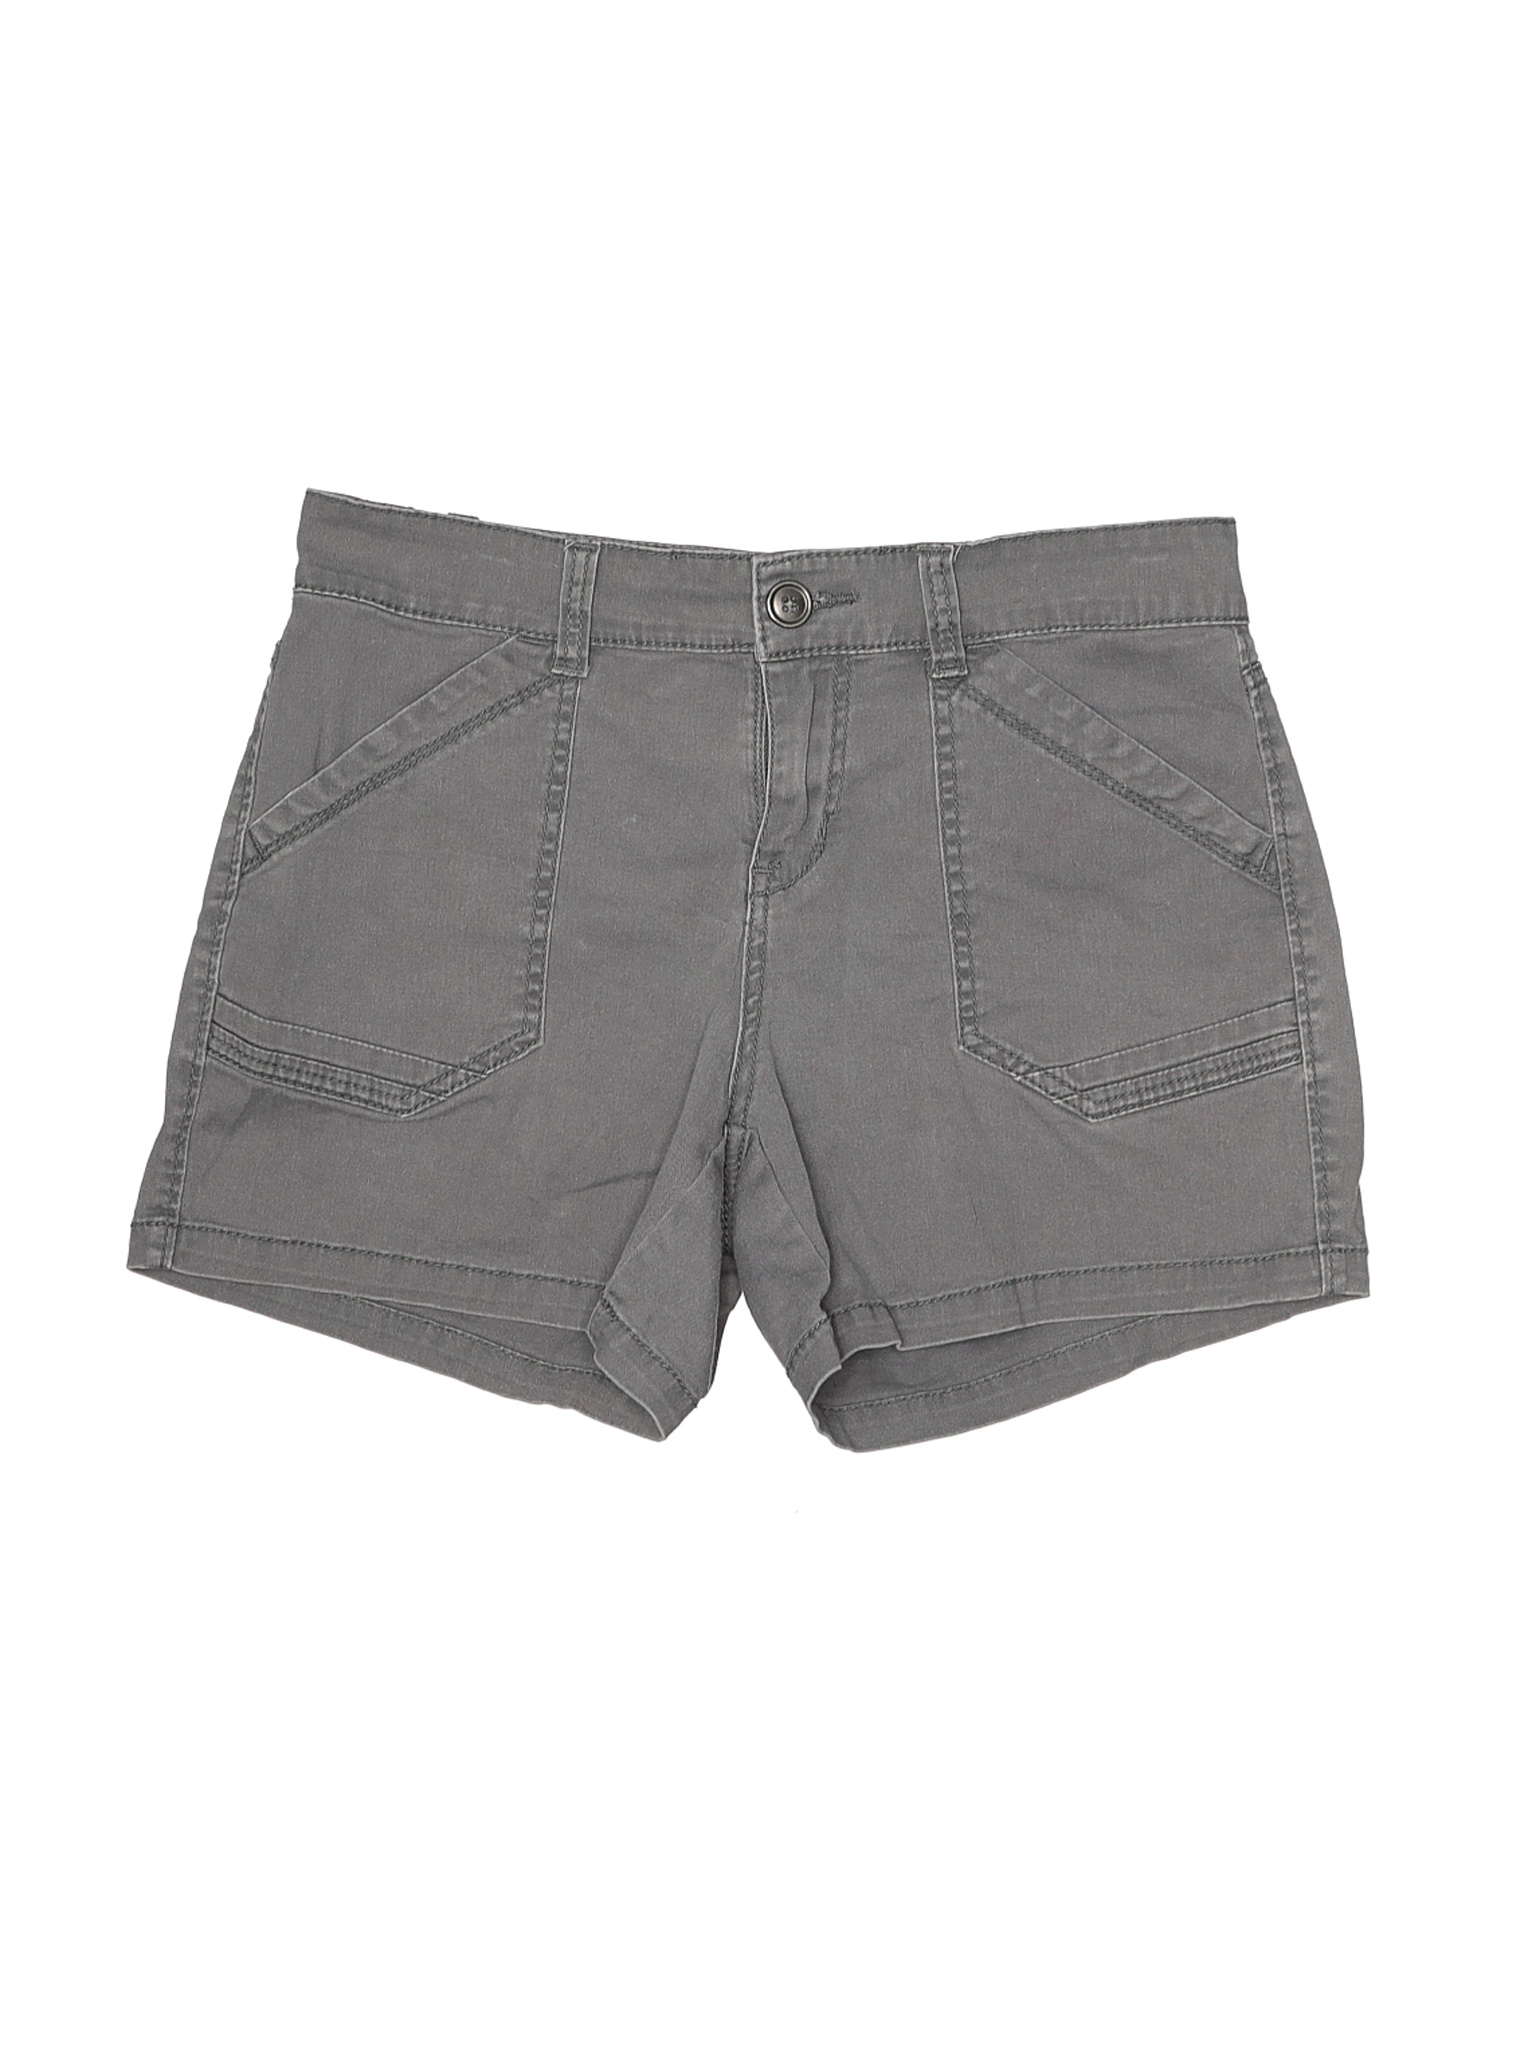 Supplies Women Gray Khaki Shorts 10 | eBay